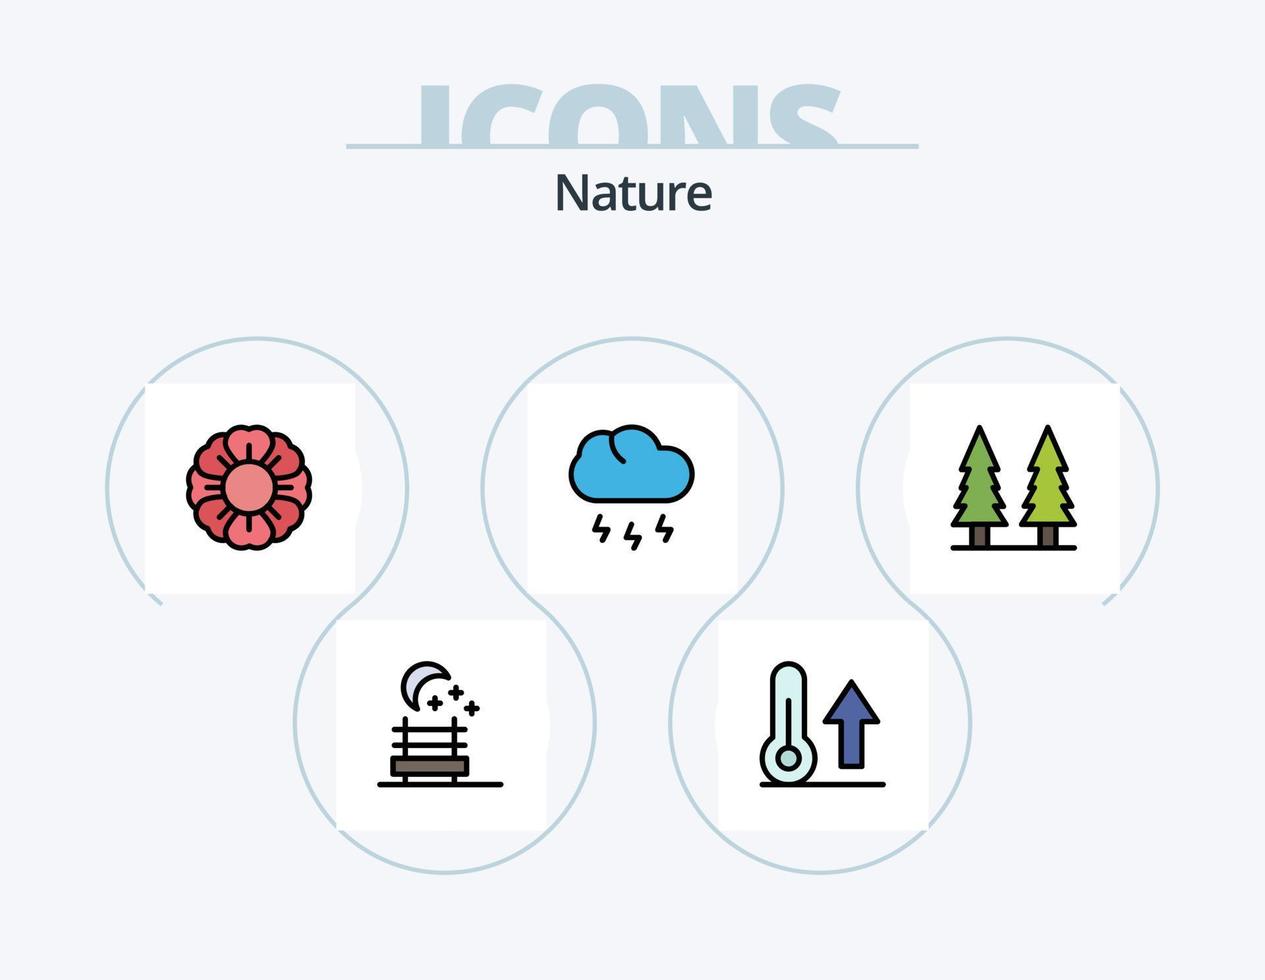 la nature ligne rempli icône pack 5 icône conception. . été. la nature. la nature. la nature vecteur